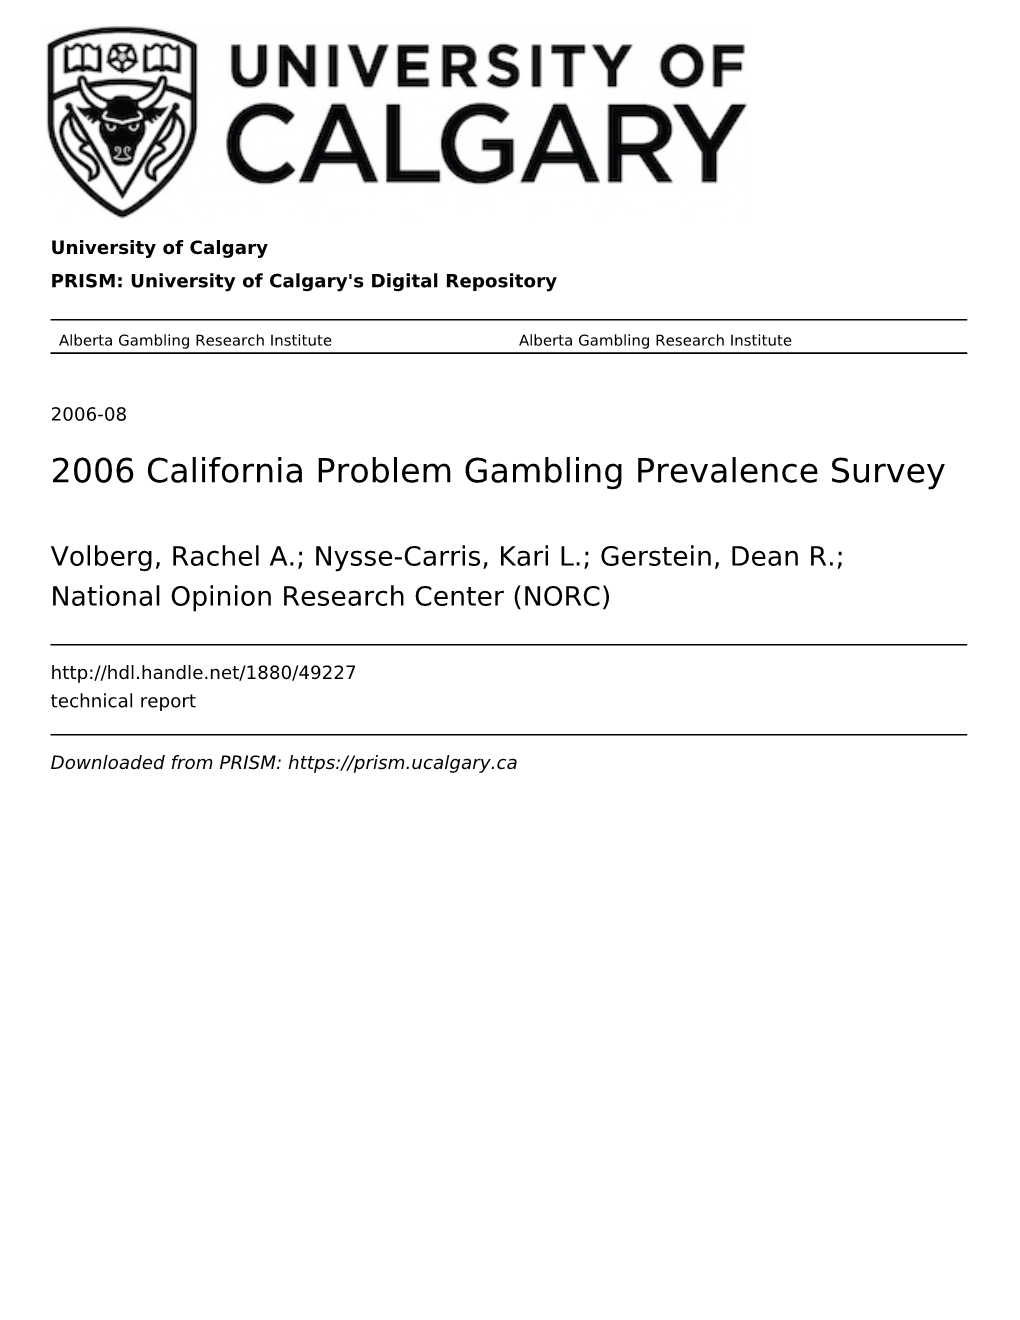 2006 California Problem Gambling Prevalence Survey